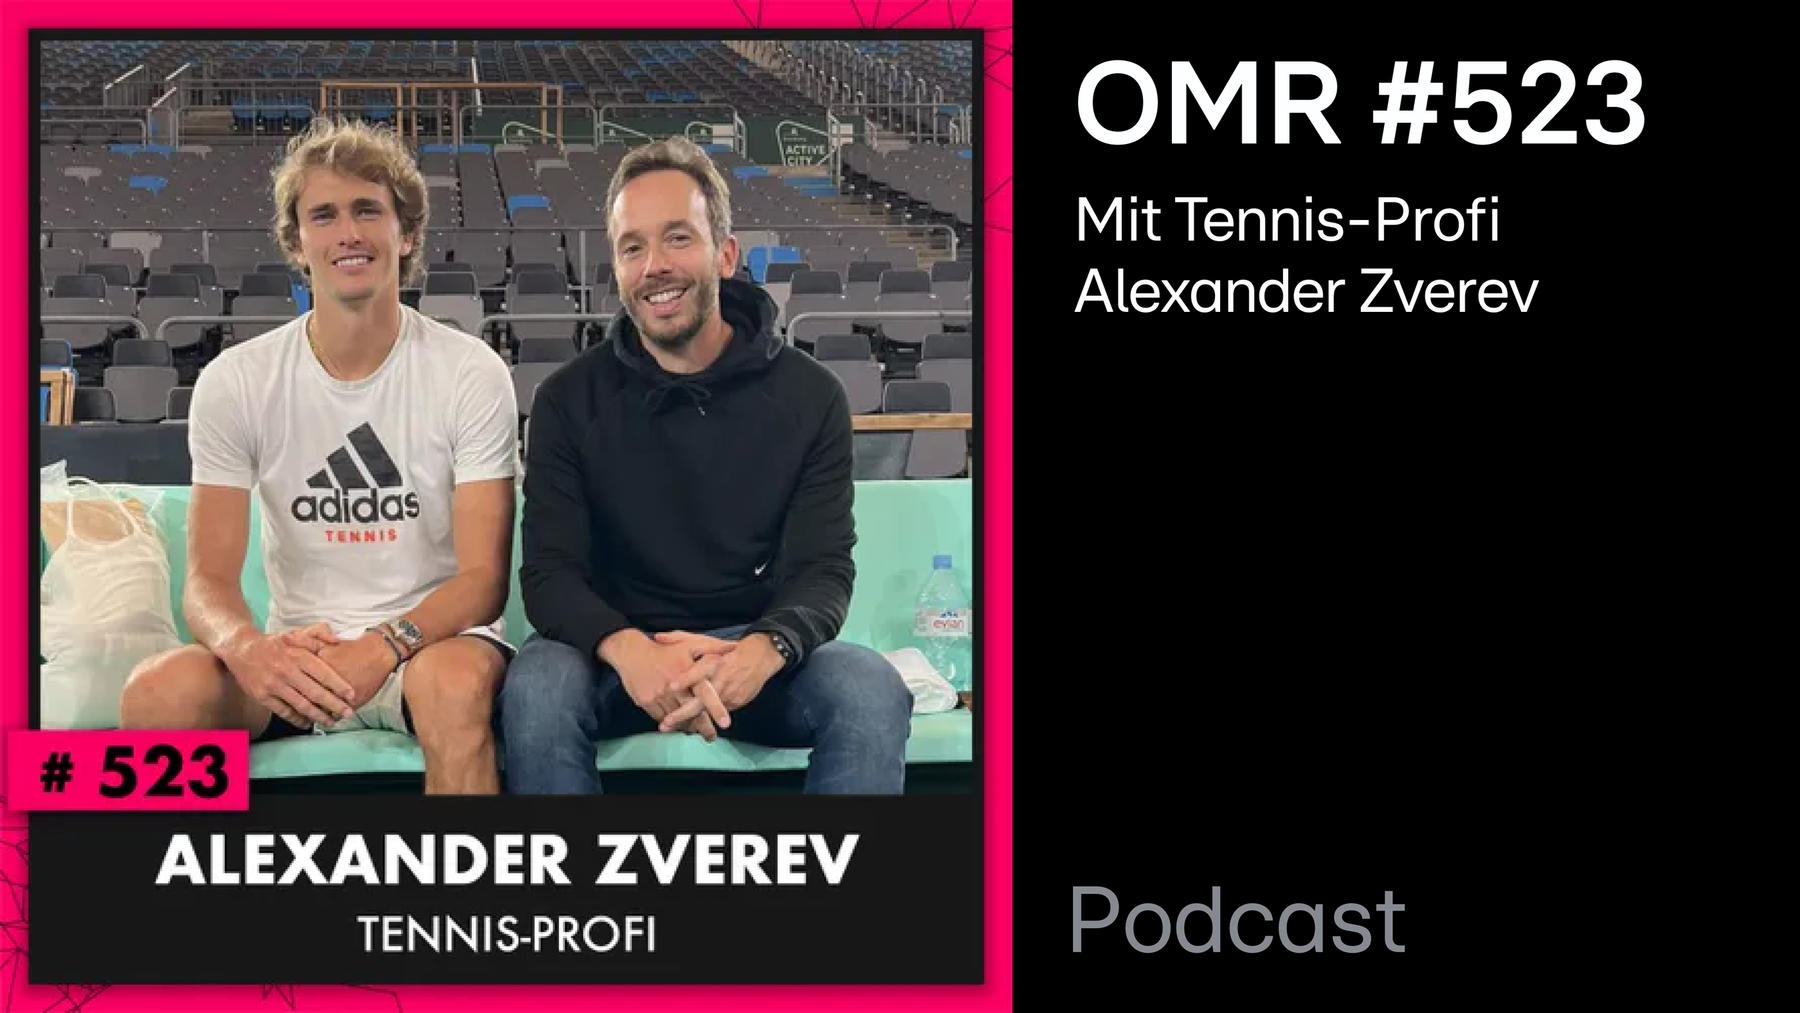 Podcast: OMR #523 mit Tennis-Profi Alexander Zverev